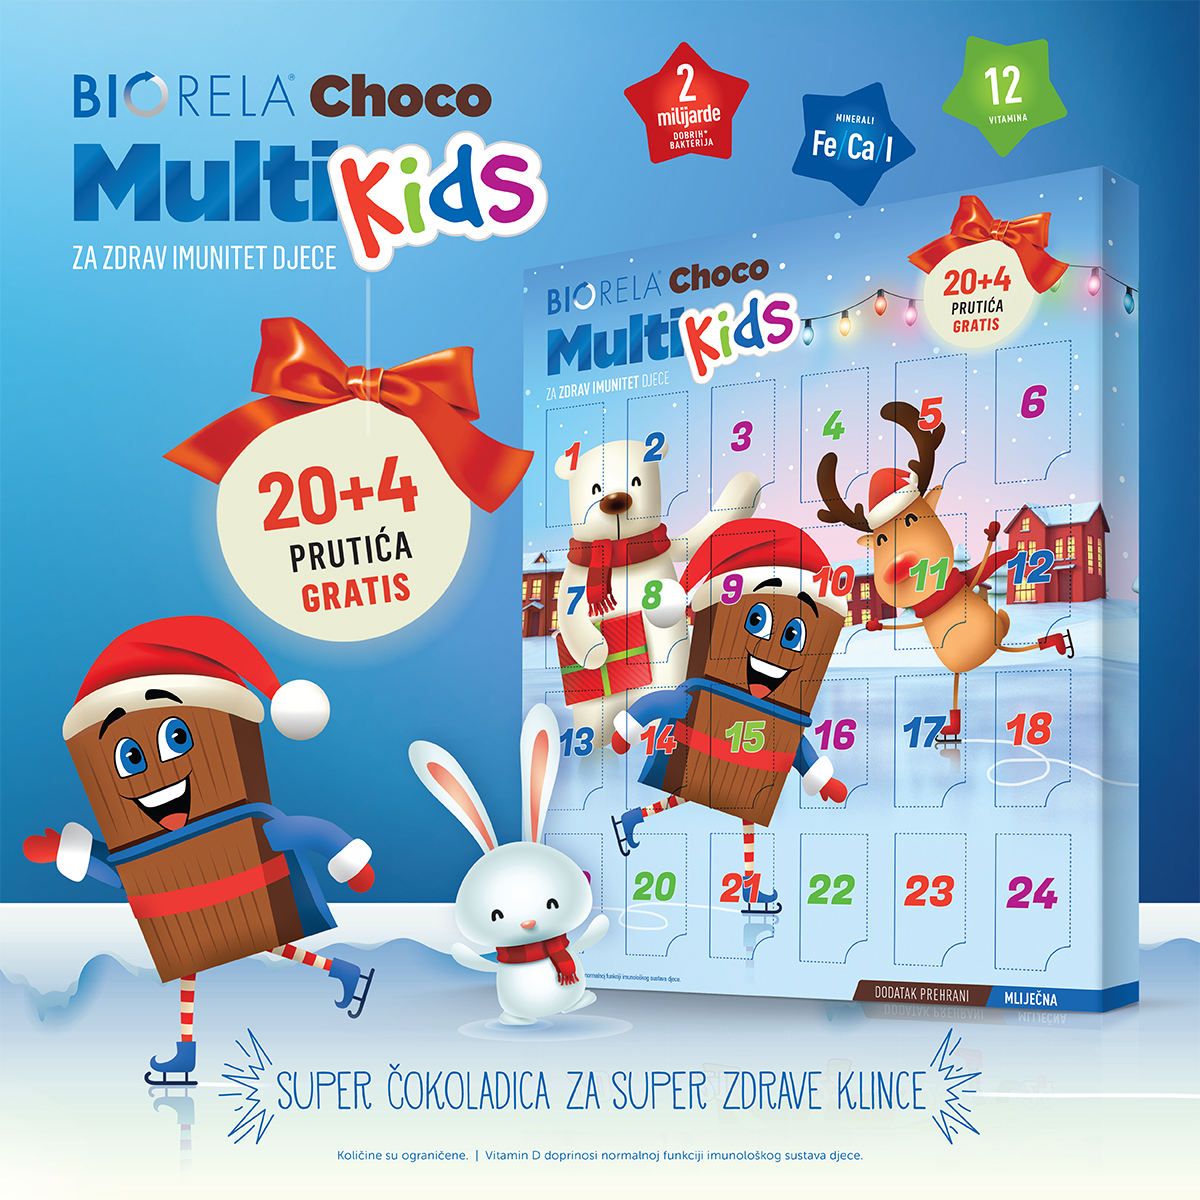 Biorela Choco MUlti Kids adventski kalendar